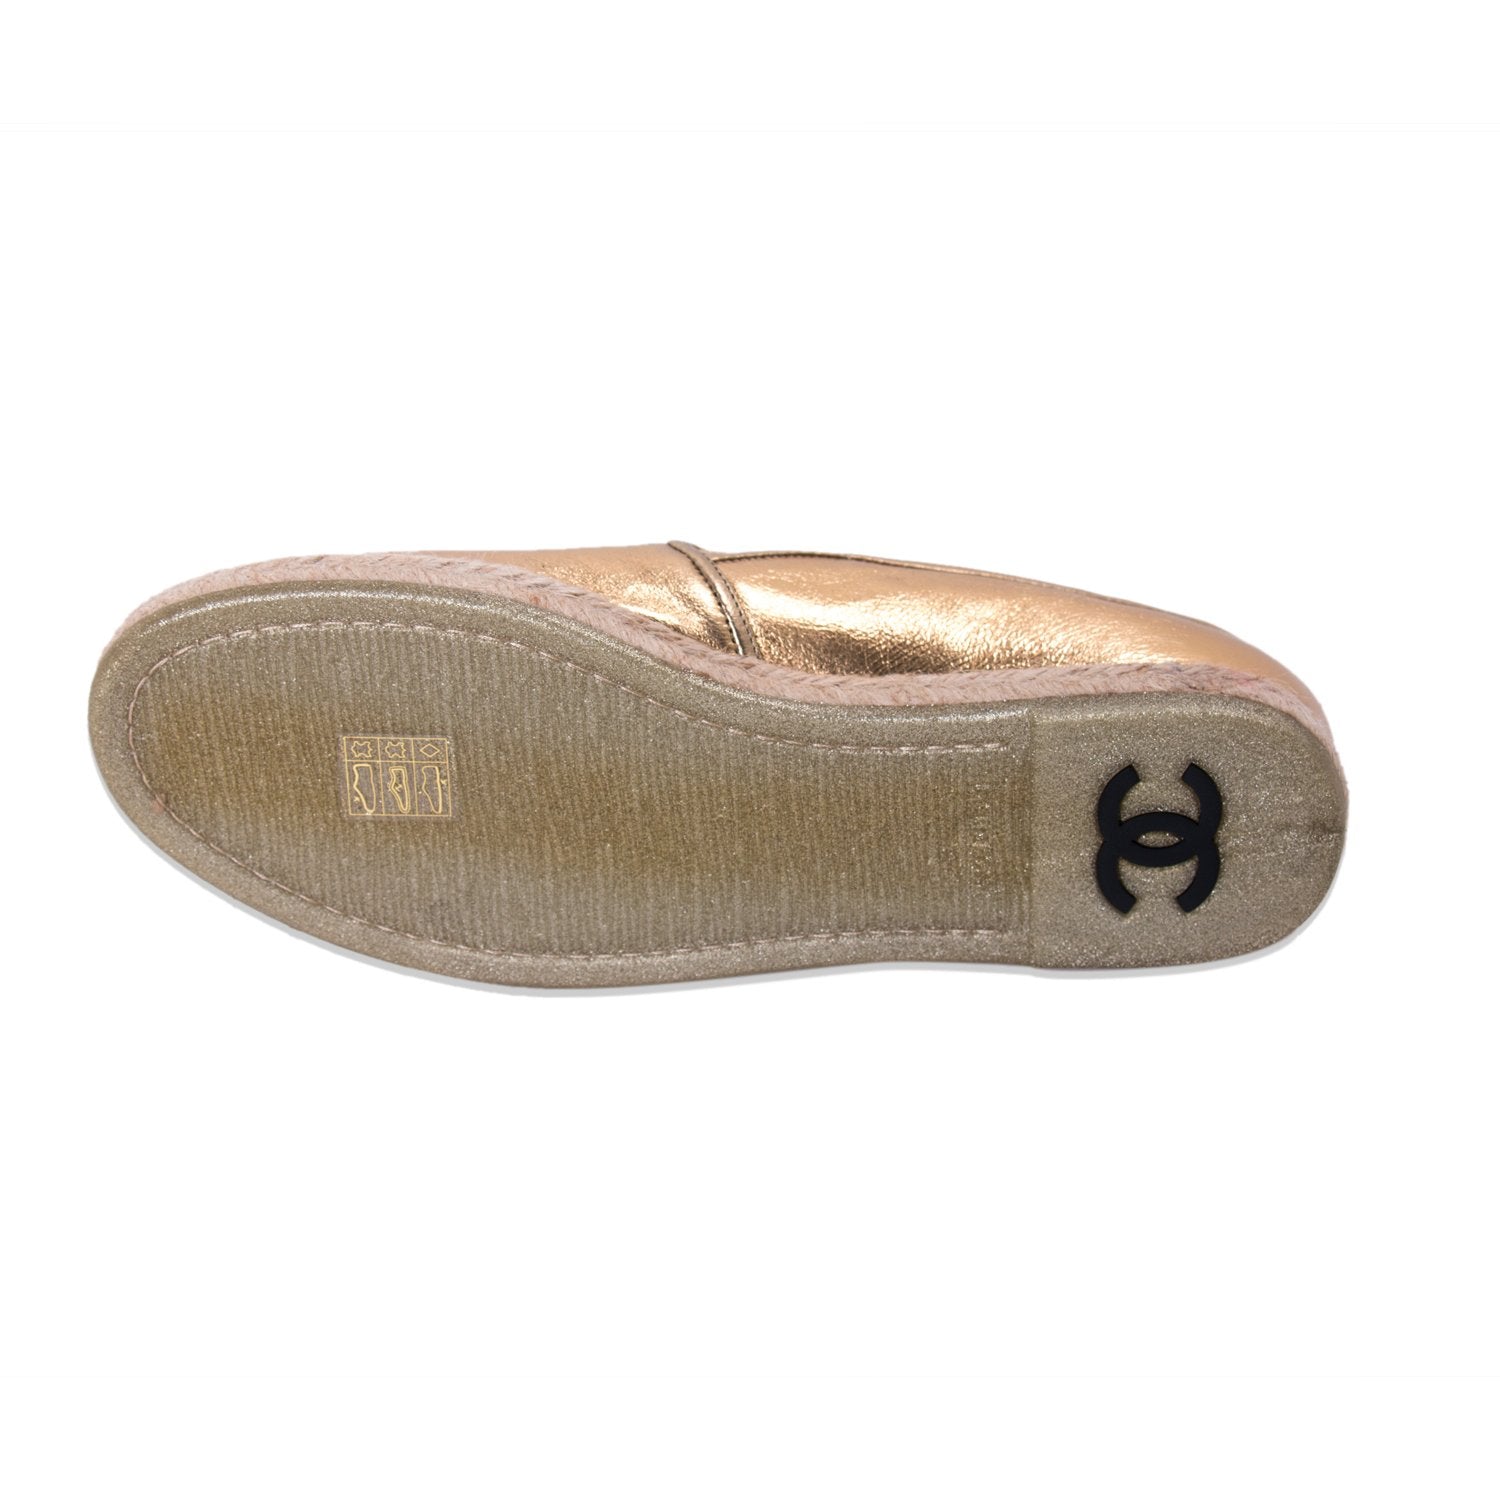 Buy & Consign Authentic Chanel Metallic Patent CC Espadrilles Gold 39 at The Plush Posh